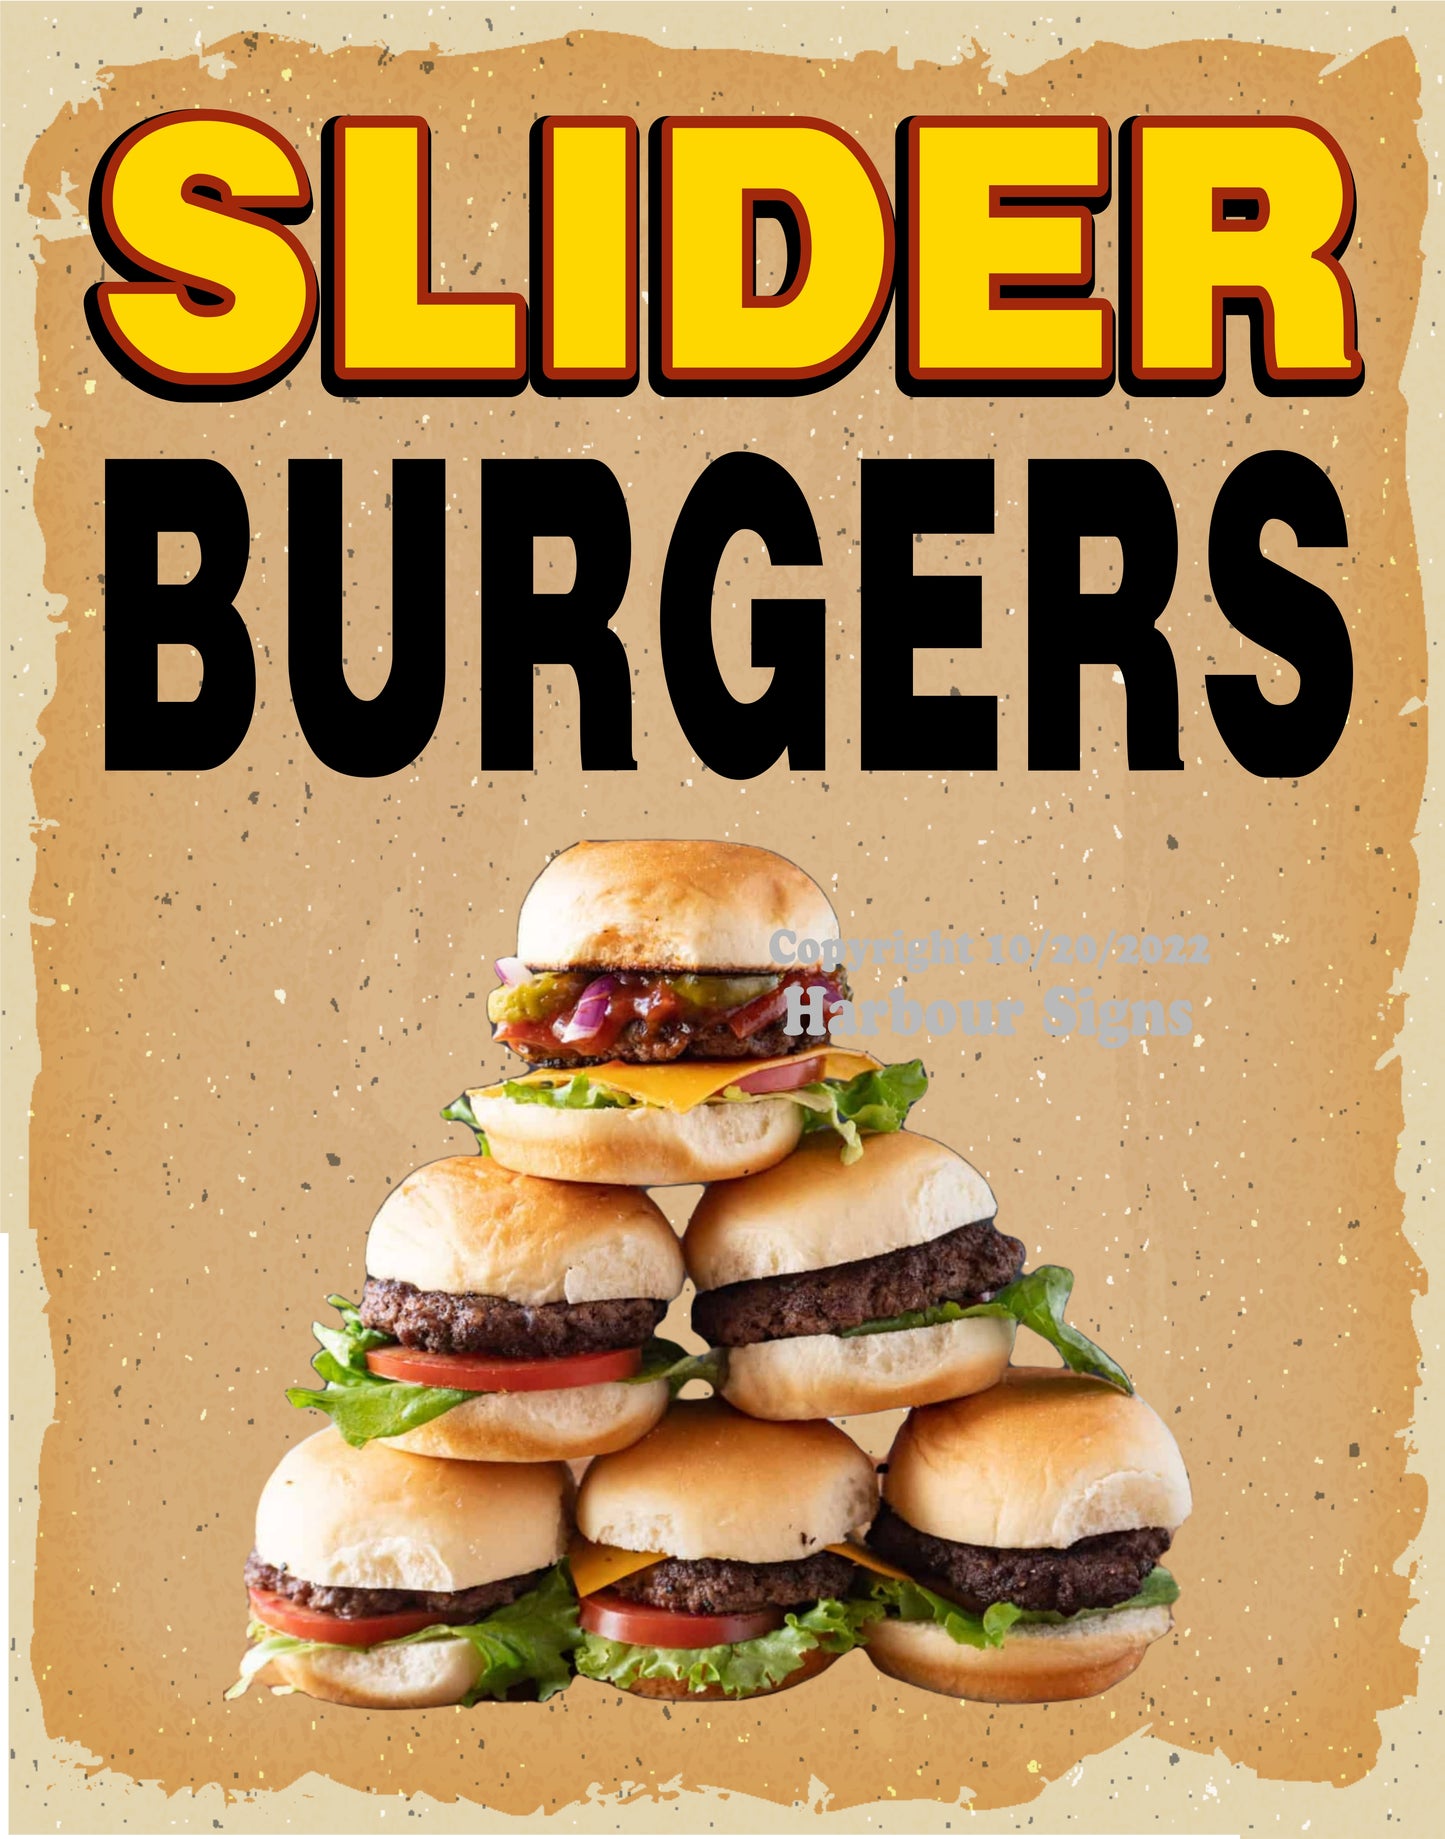 Slider Burgers Decal Food Truck Concession Vinyl Sticker v